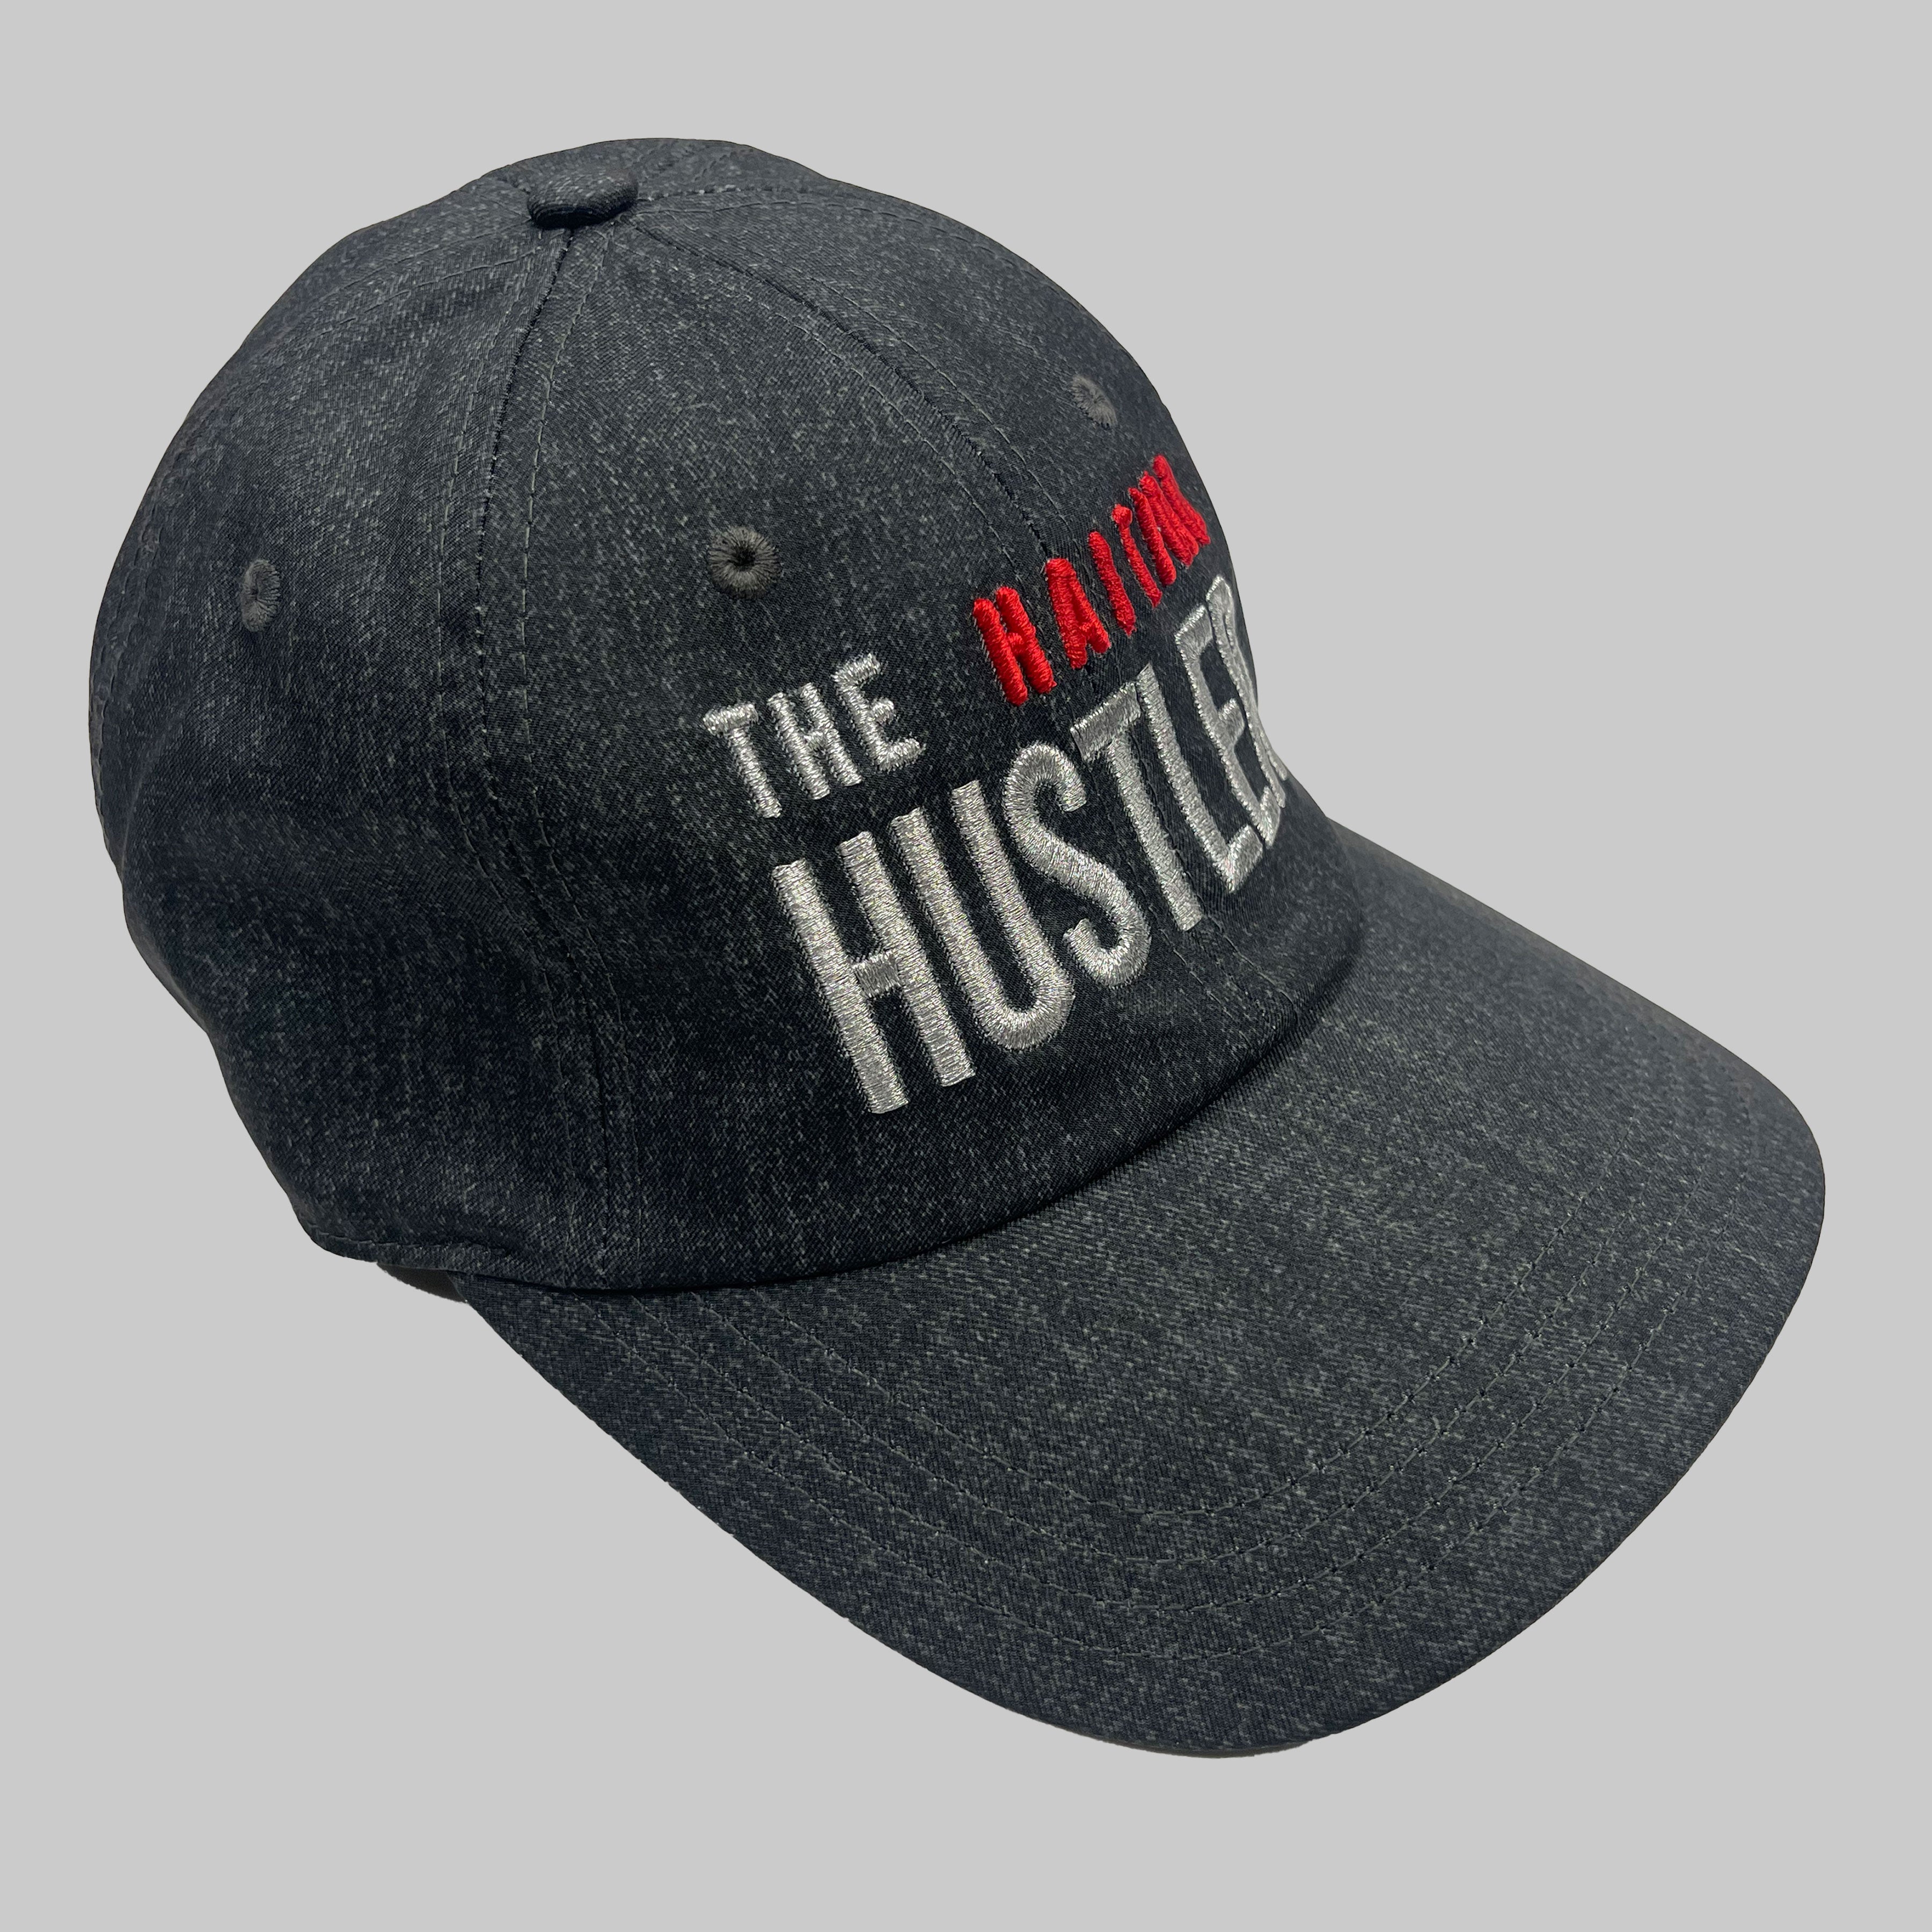 The Haitian Hustler Cap